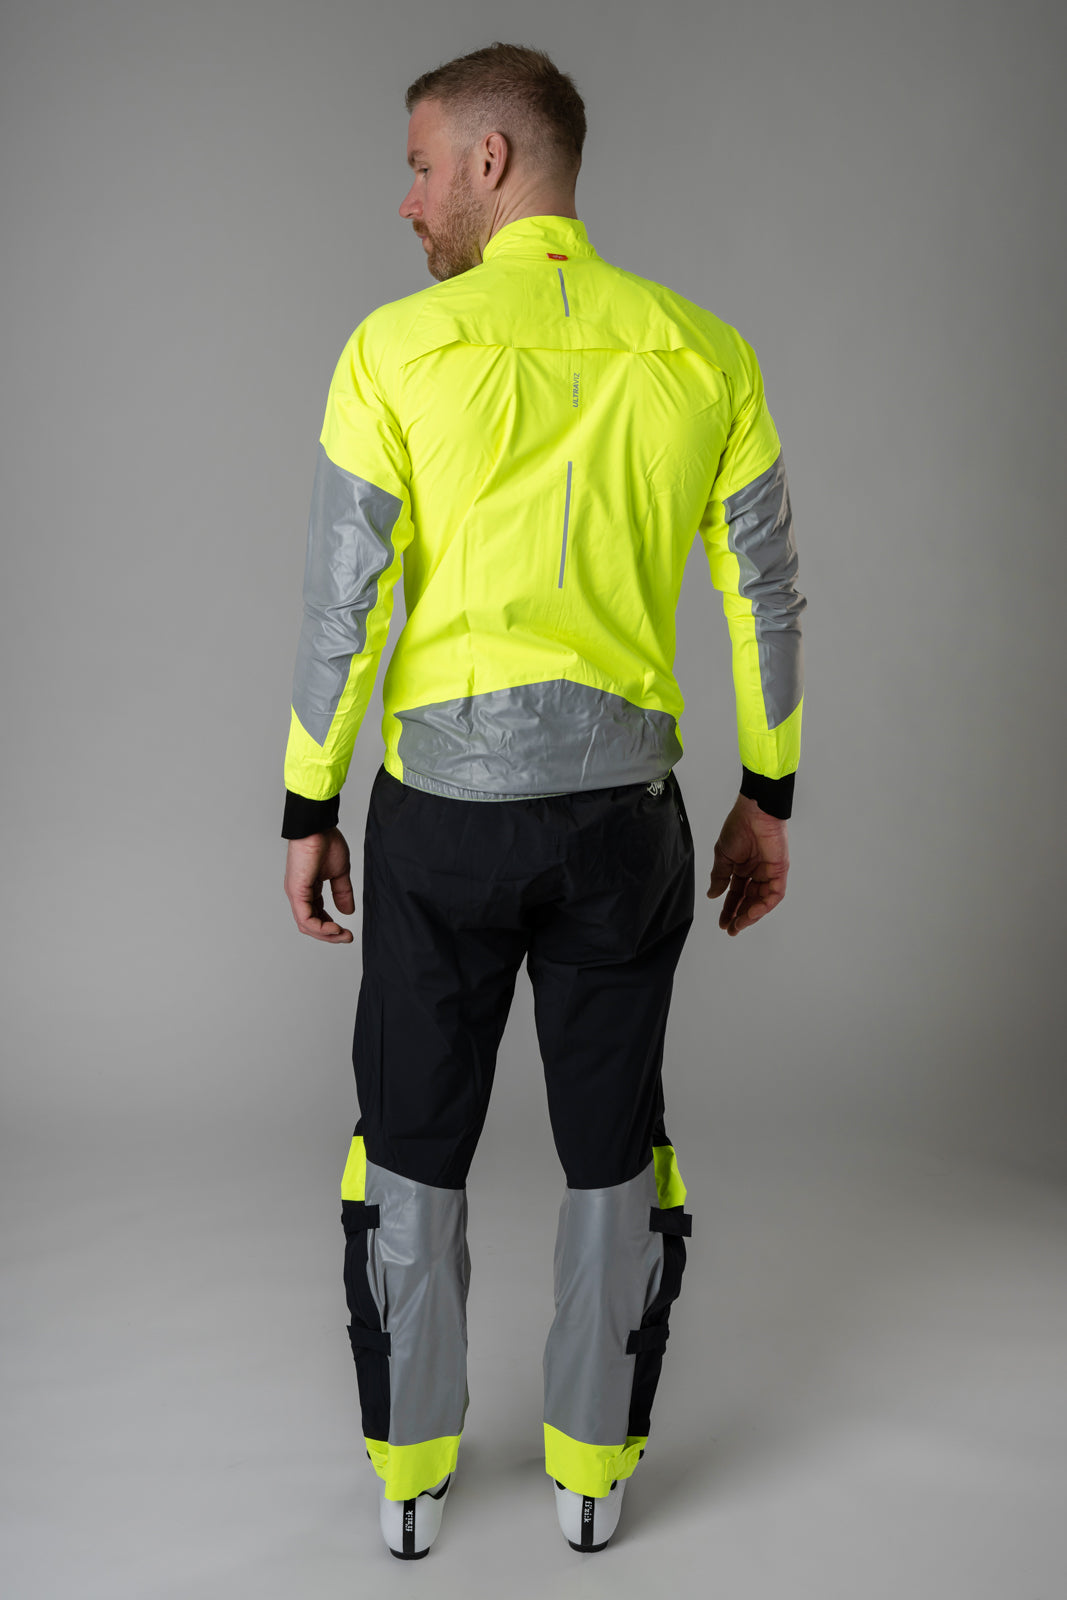 Sigr Östkusten Biomotion Ultraviz Cycling Rain Trousers for Men and Women